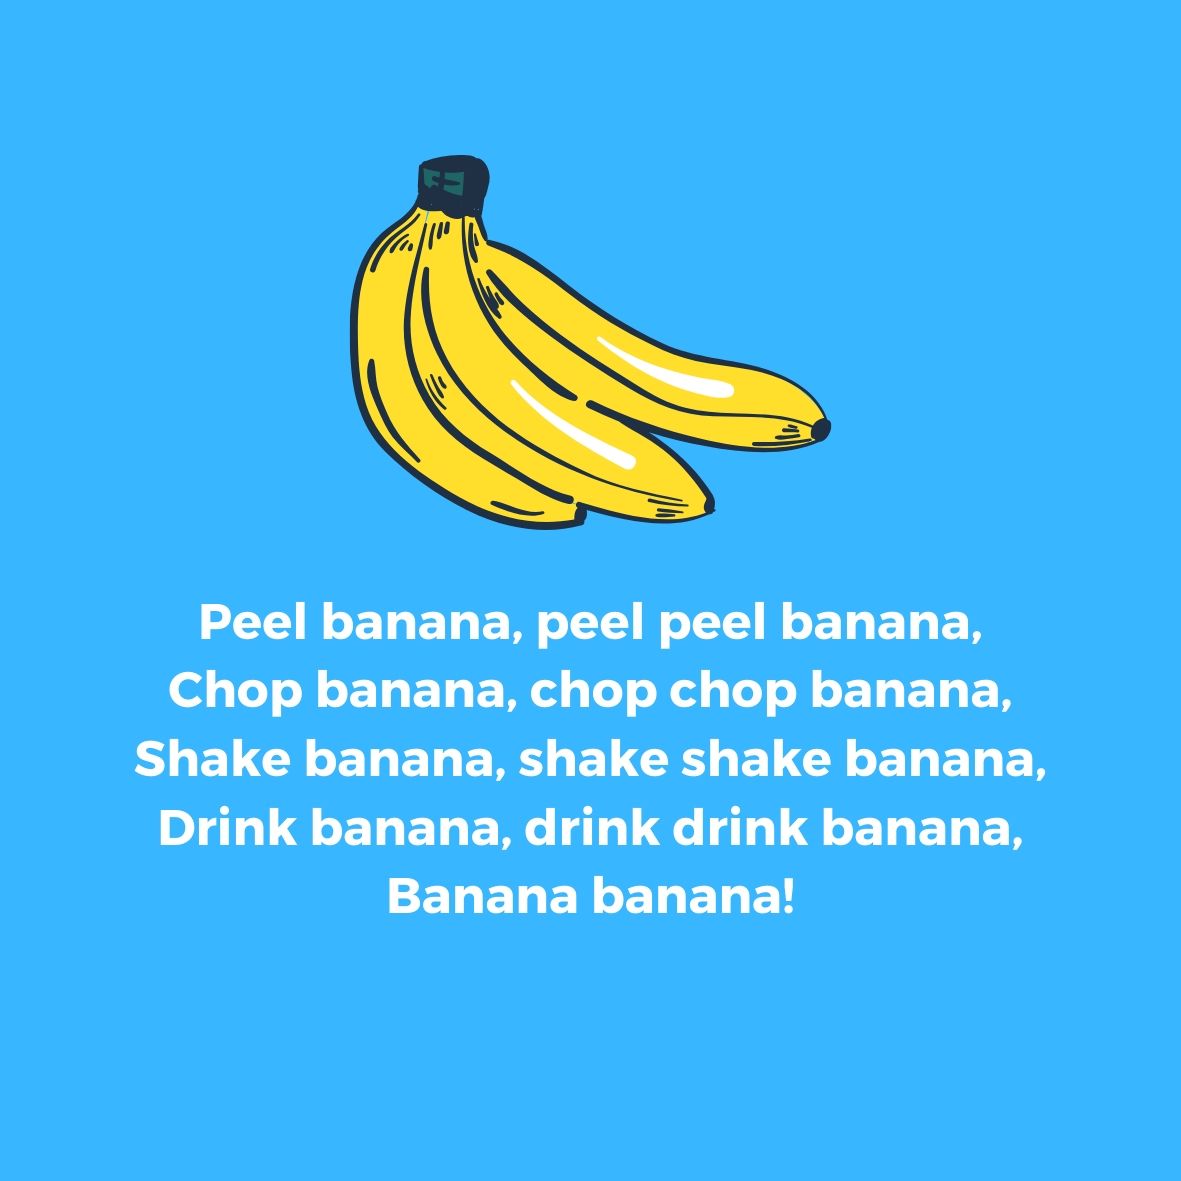 Classroom management tips - banana game